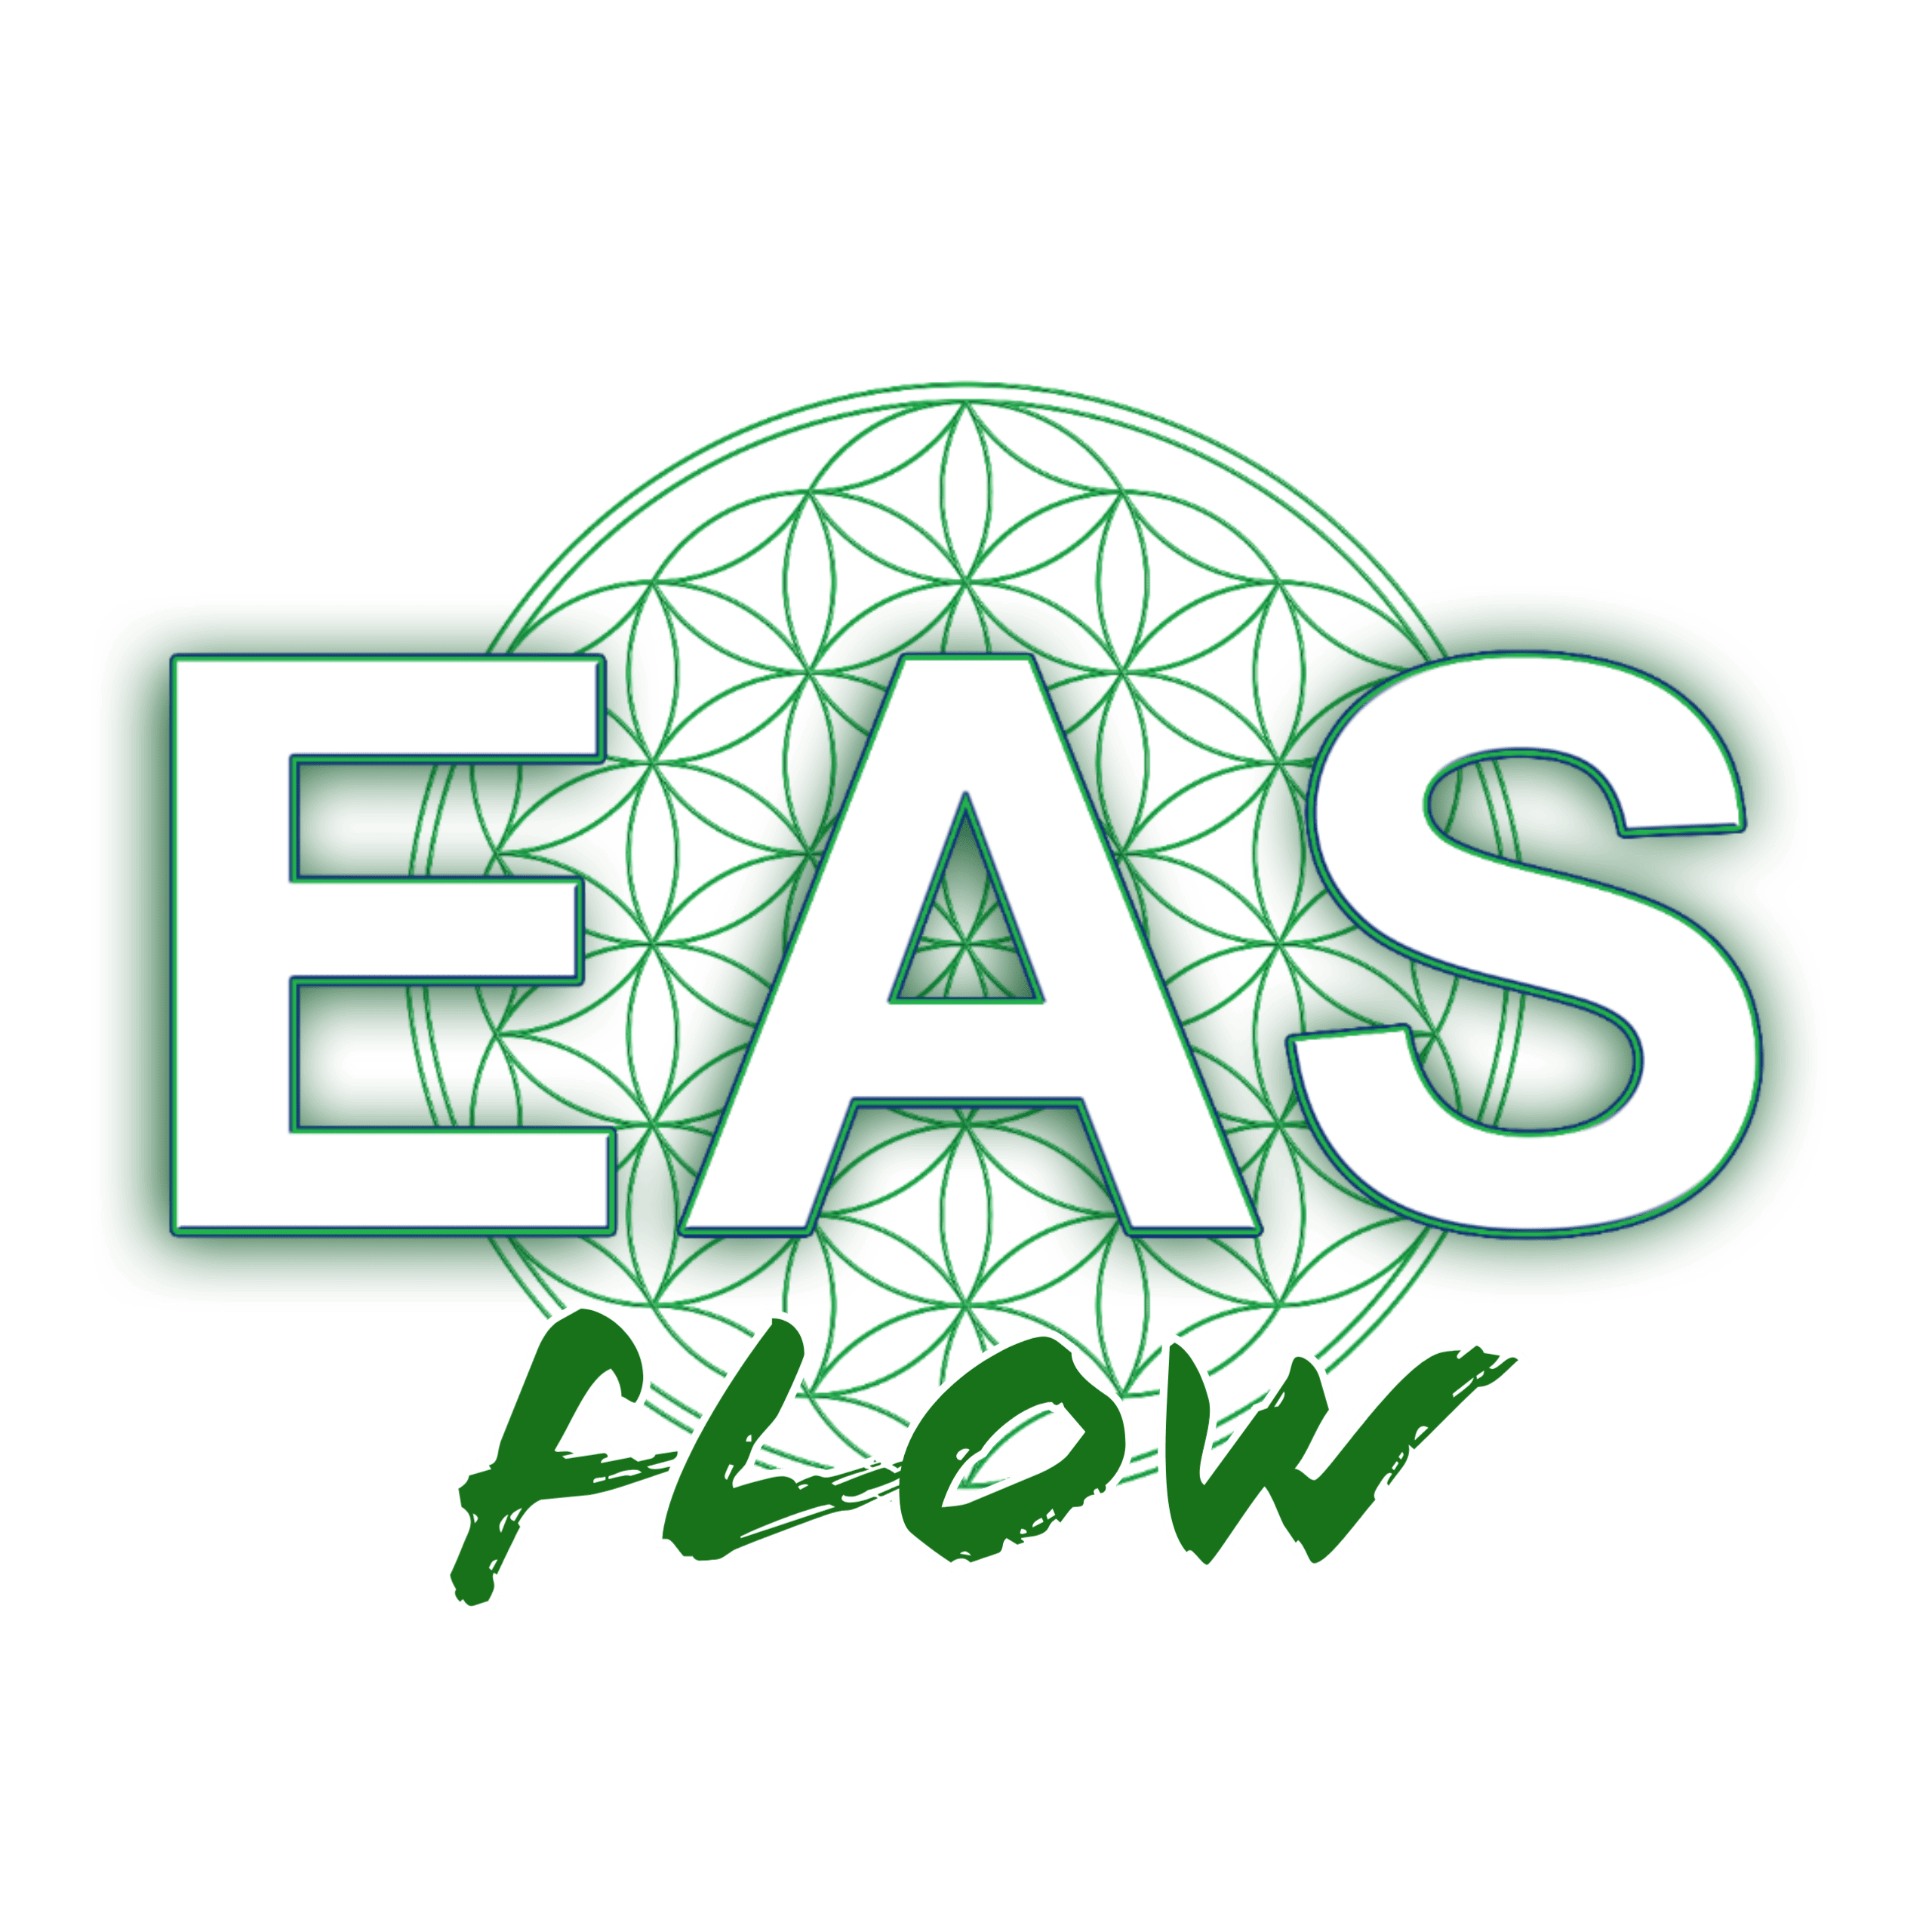 EAS FLOW